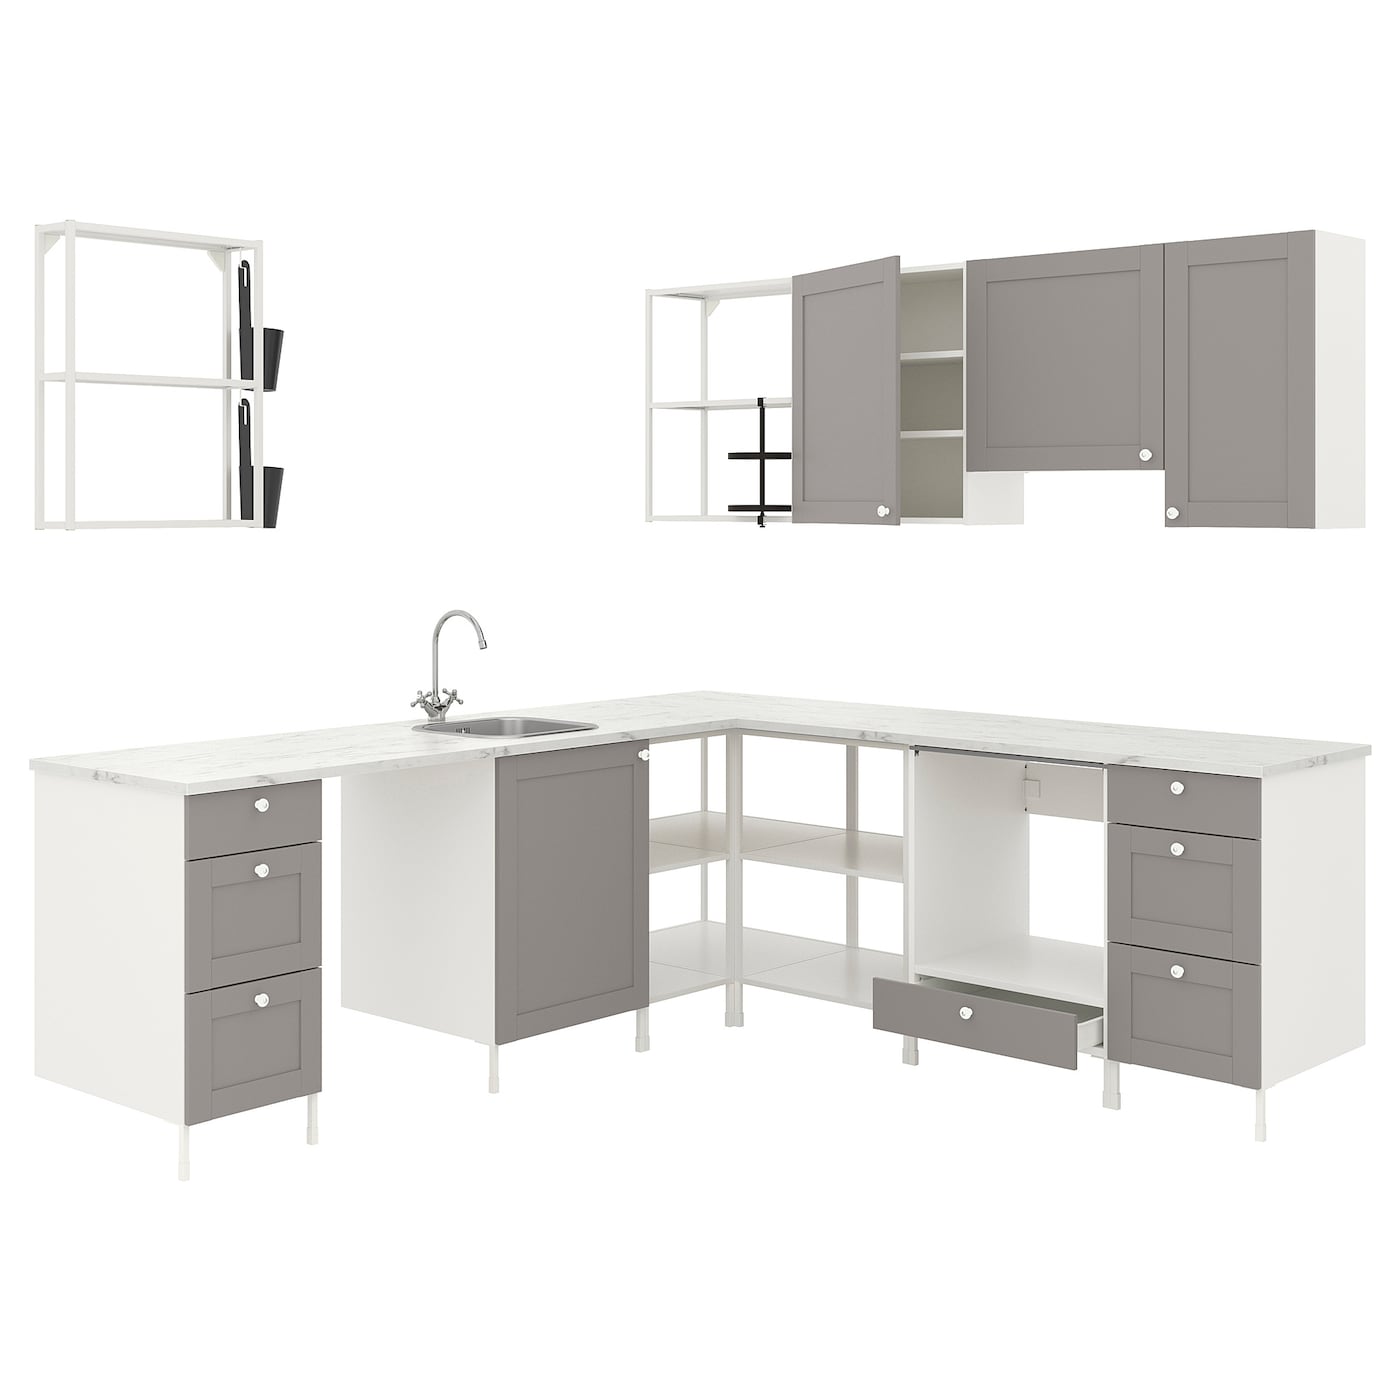 Угловая кухонная комбинация для хранения - ENHET  IKEA/ ЭНХЕТ ИКЕА, 261.5х221,5х75 см, белый/серый